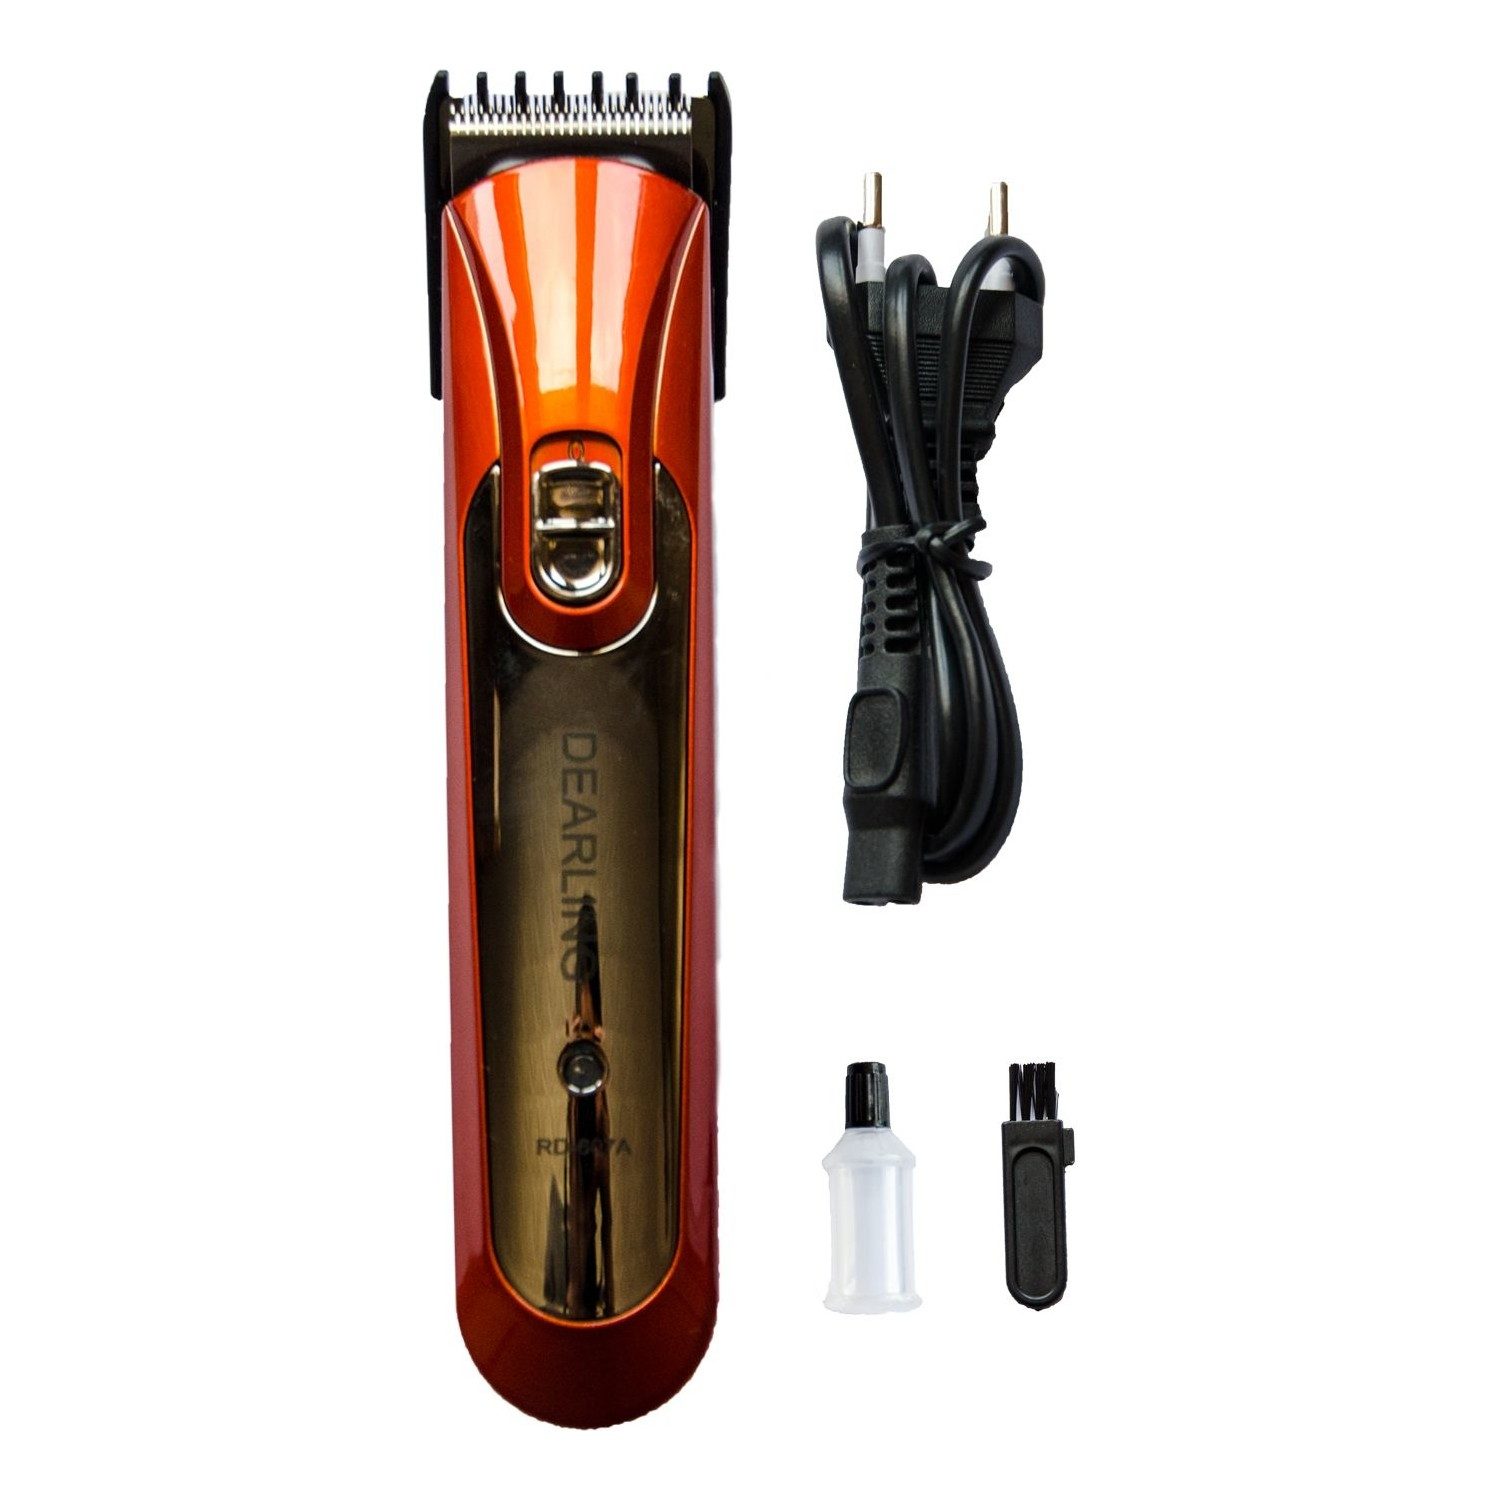 CLZ192 Rd-607 A Şarjlı Saç Sakal Tıraş Makinesi (4172)